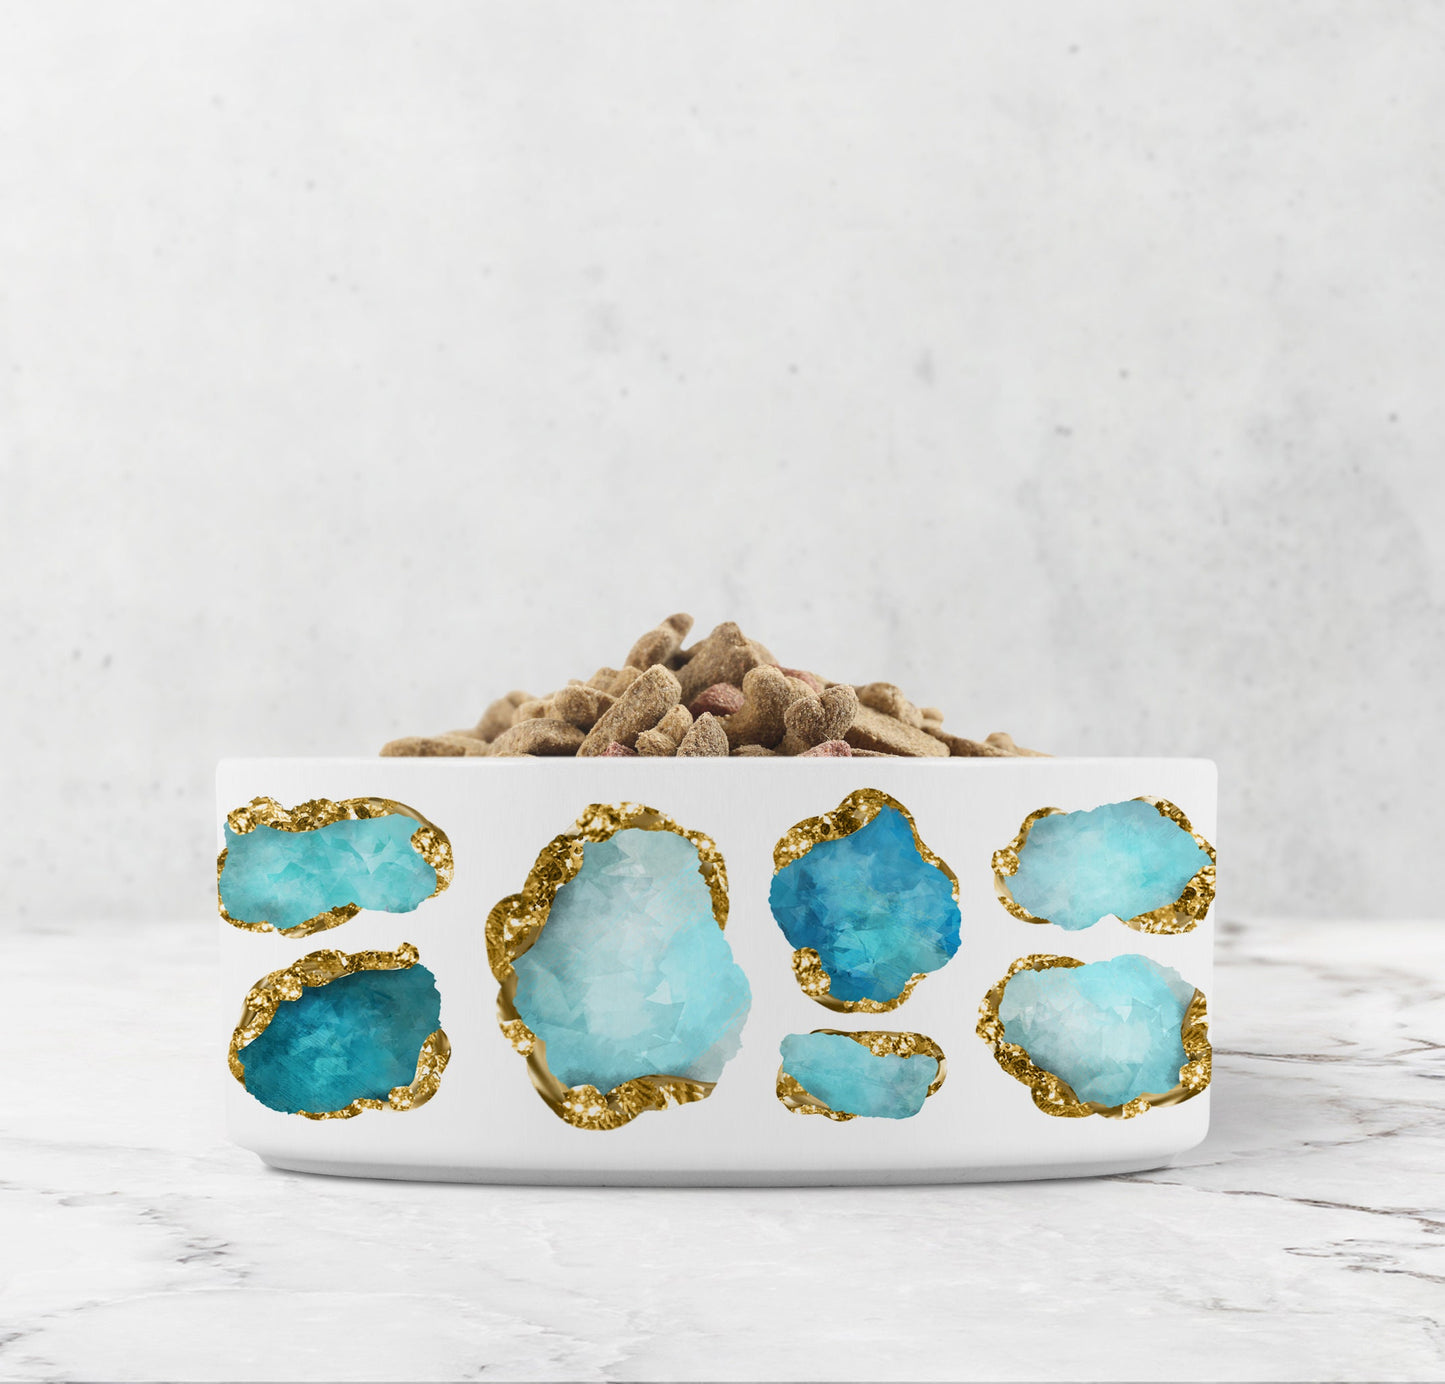 Jewel Encrusted Ceramic Pet Bowl, Aquamarine and Gold